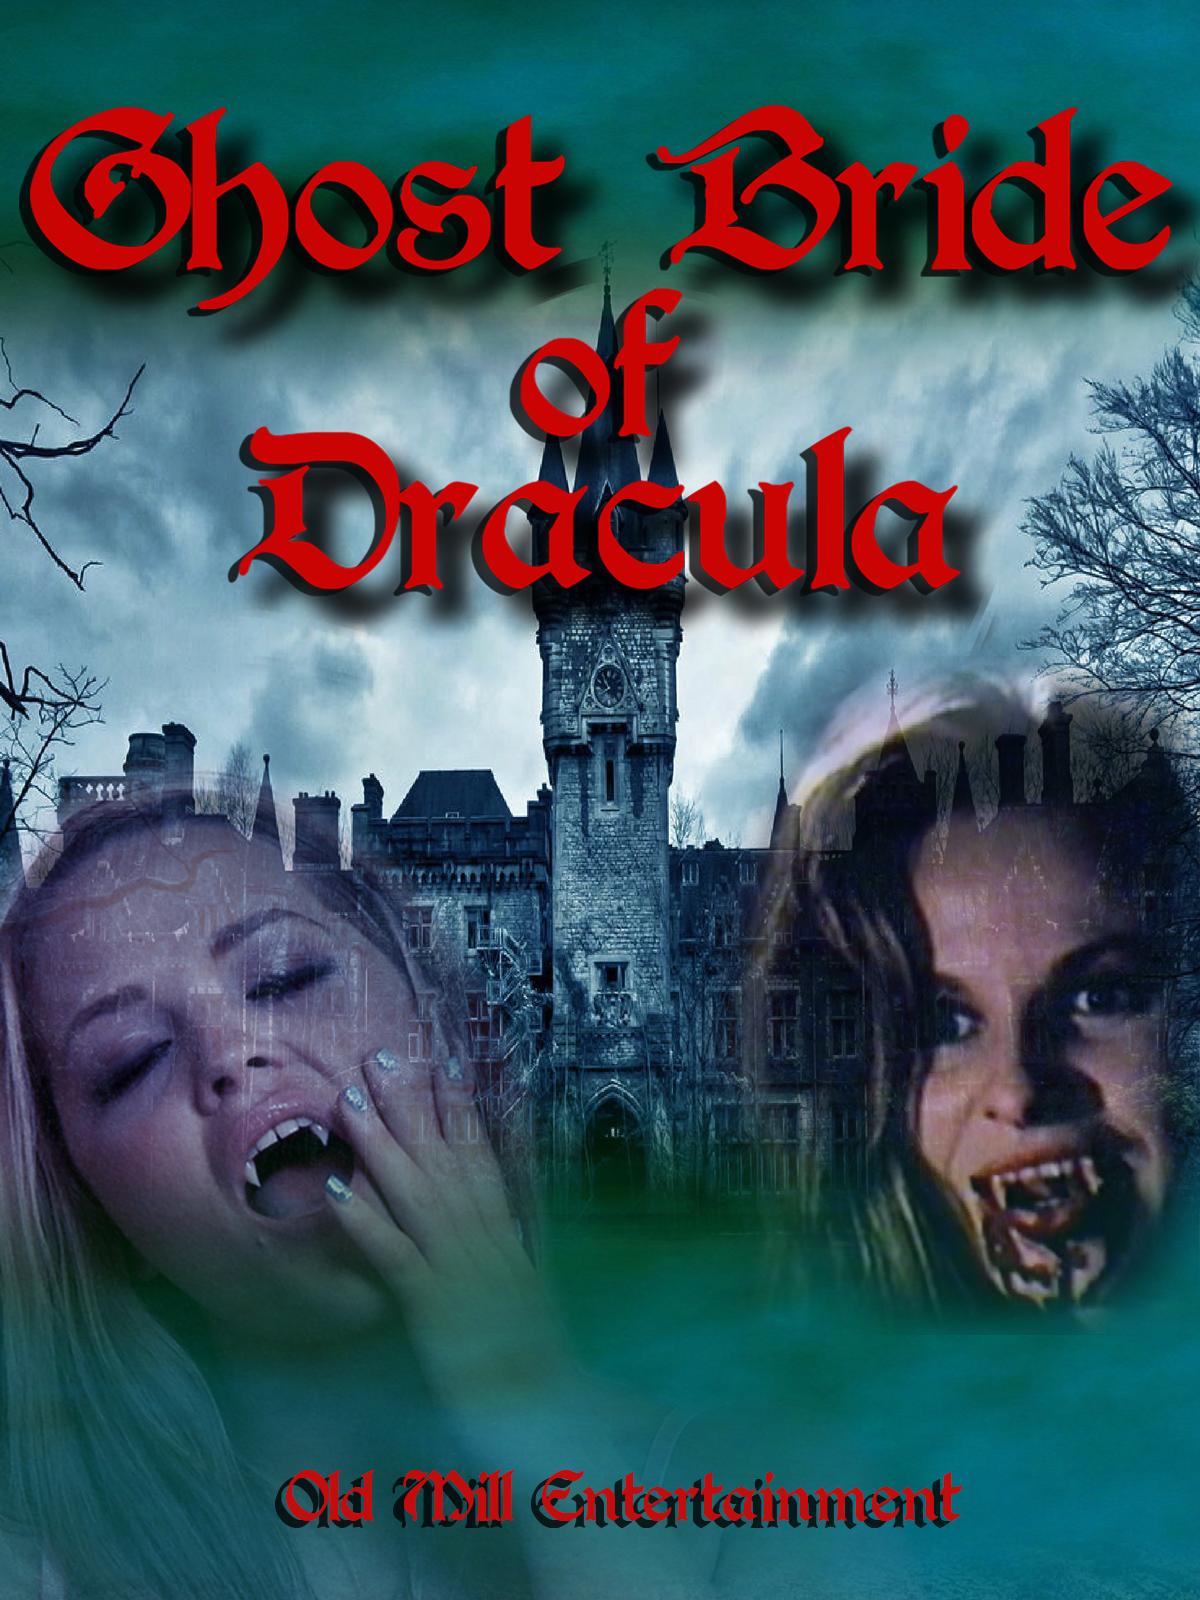 An Erotic Tale of Ms. Dracula (2014) Screenshot 1